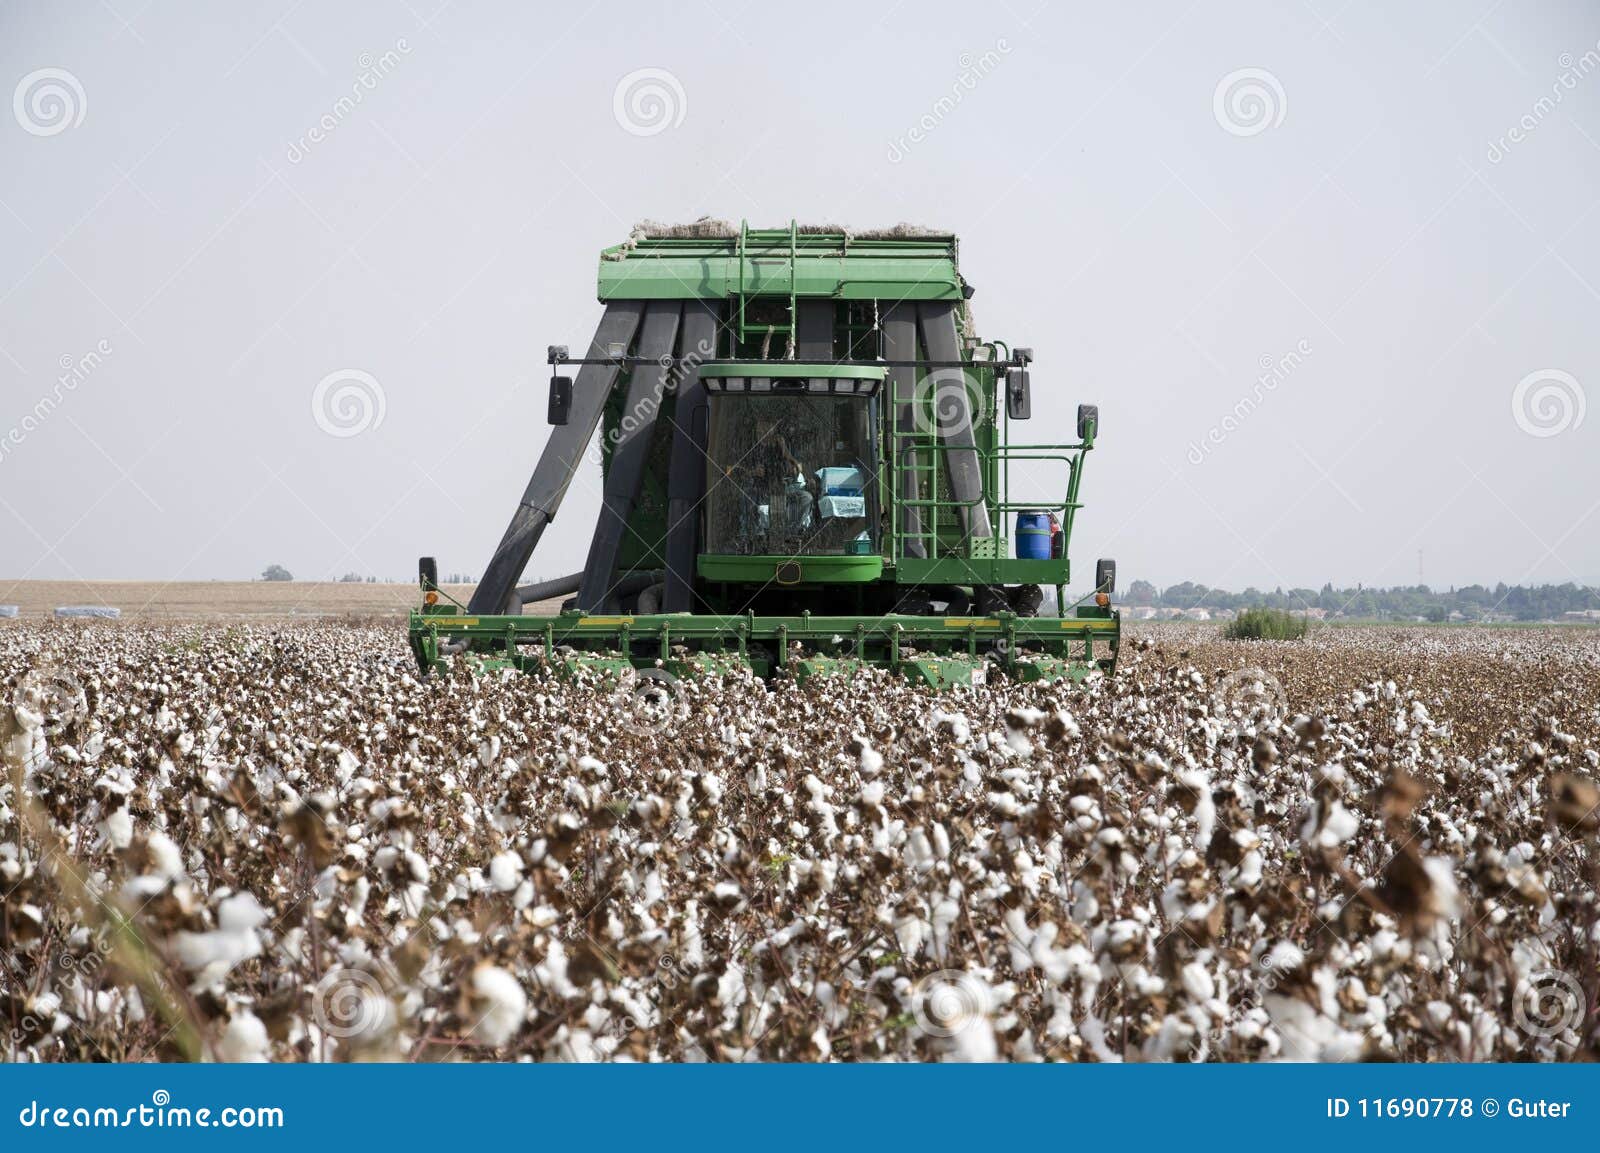 cotton picker